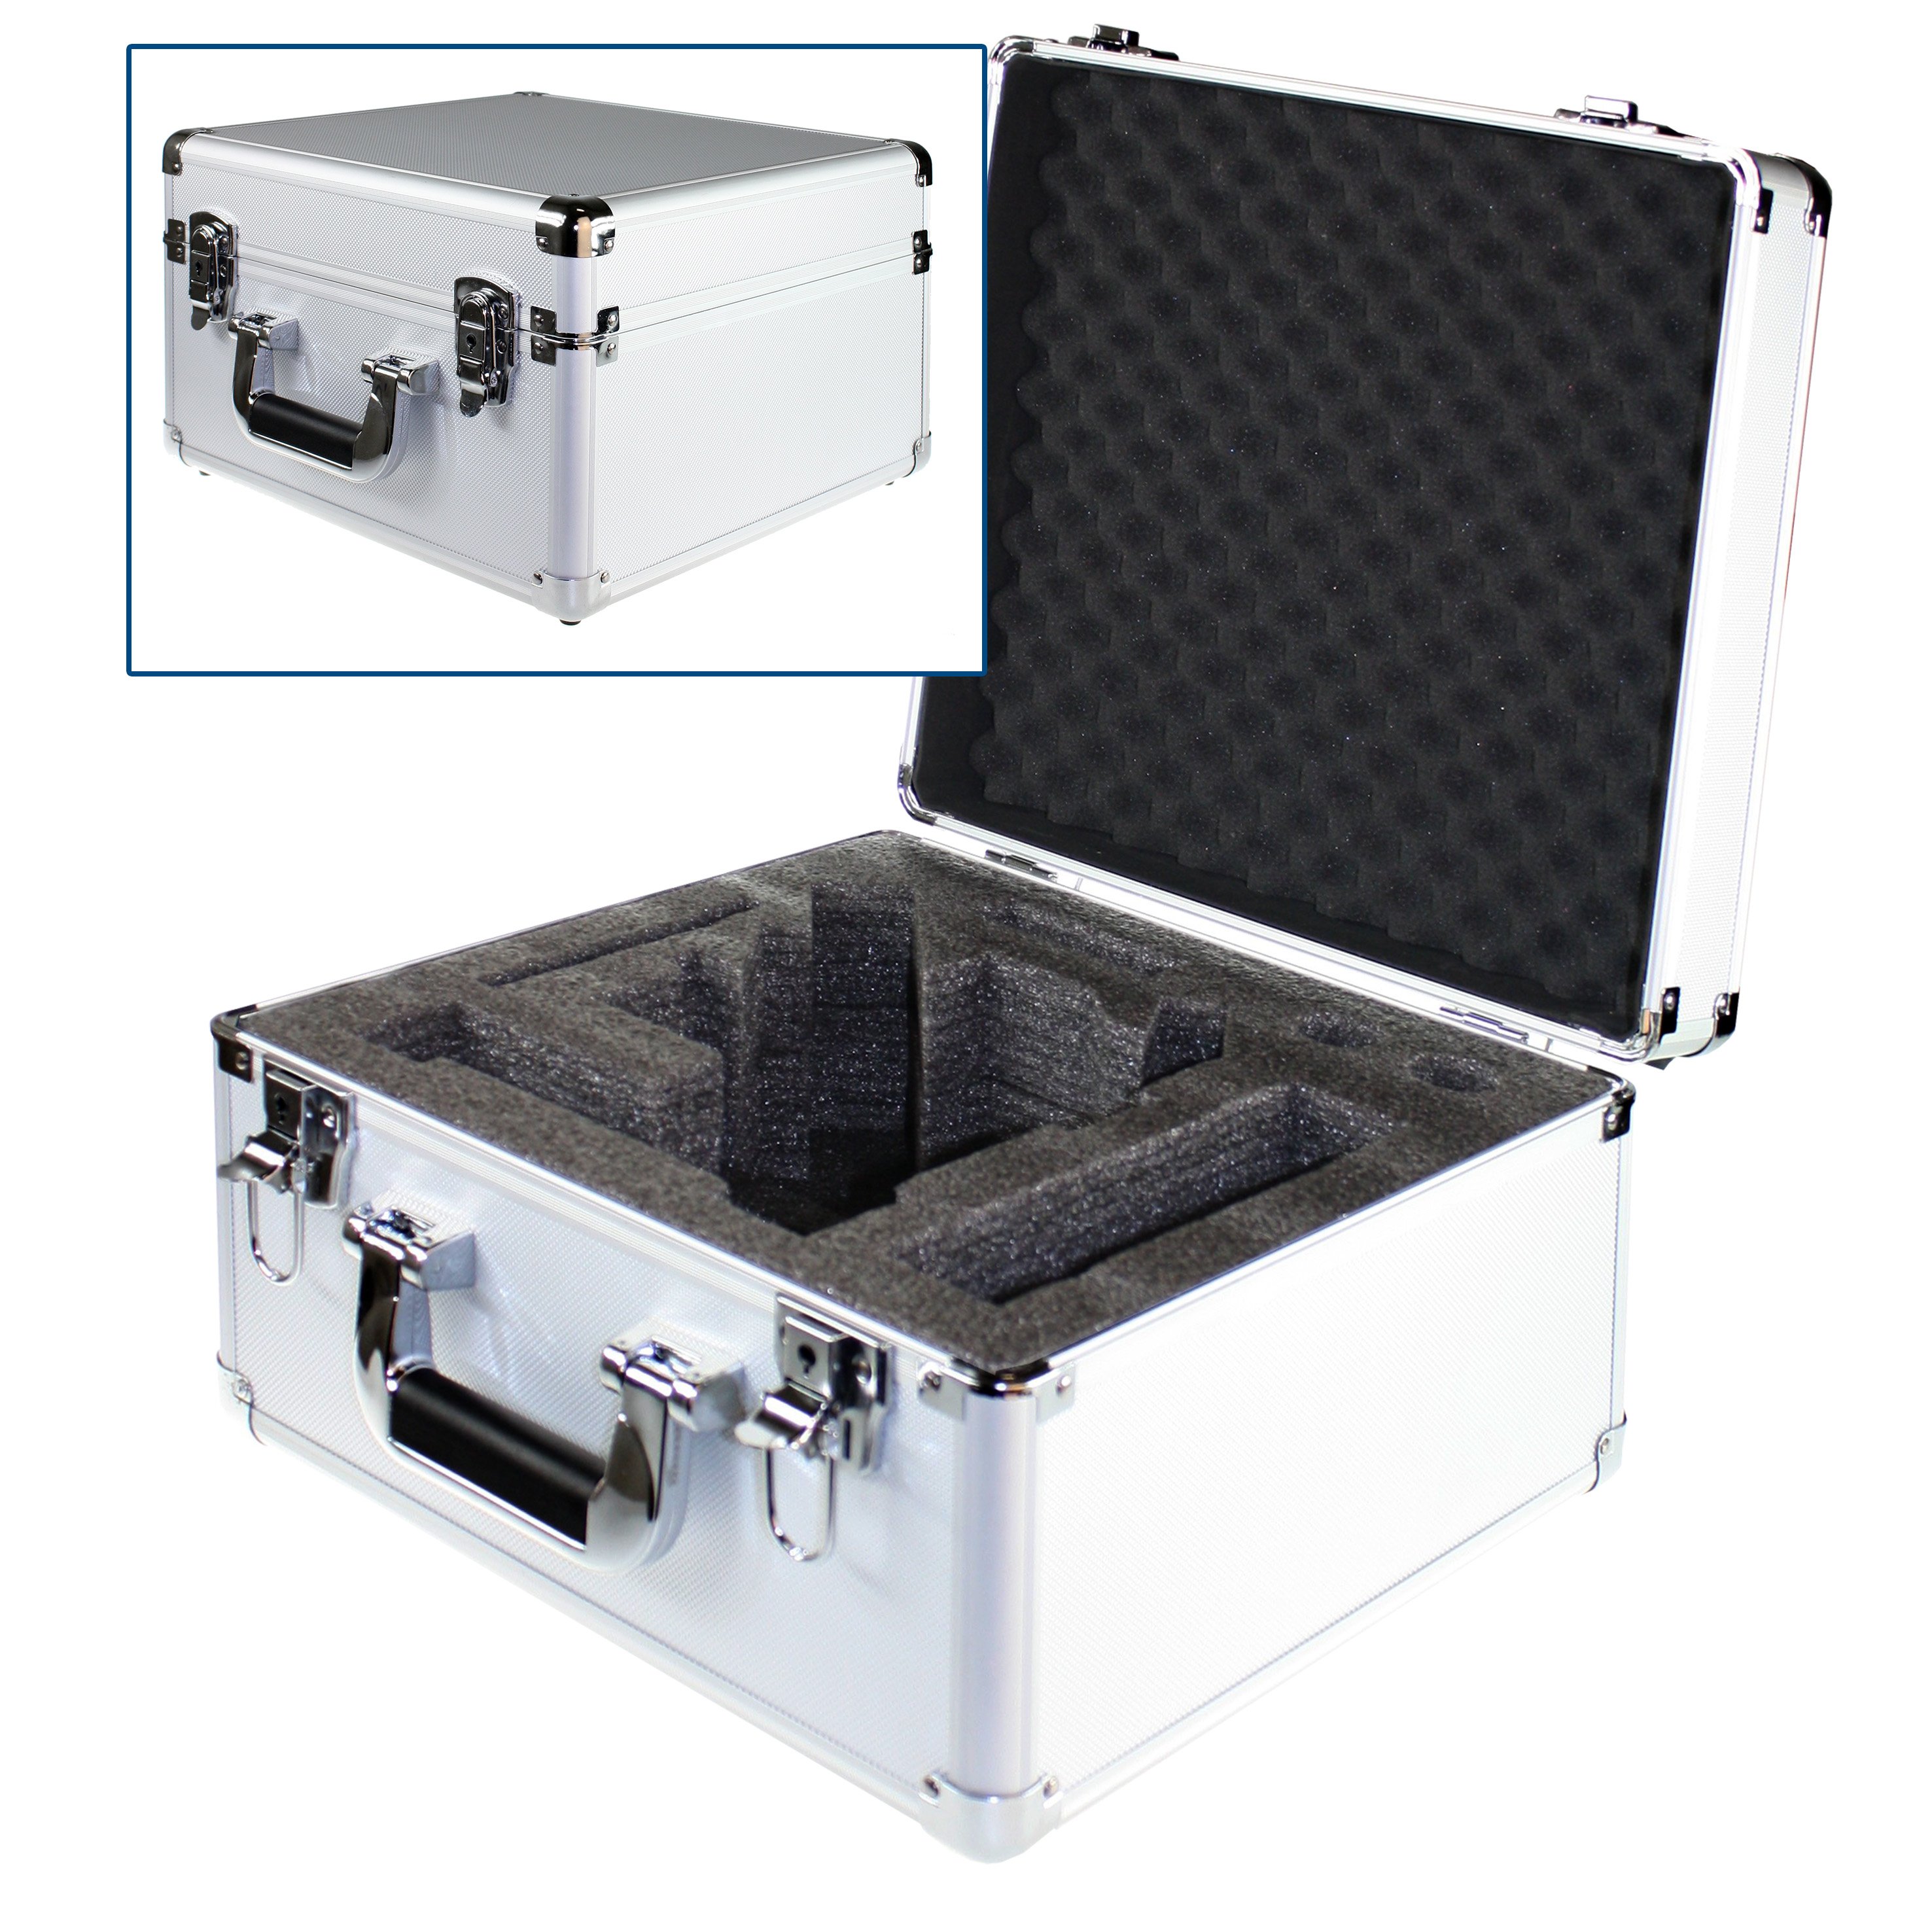 Aluminium Transport case for Bioblue Microscope